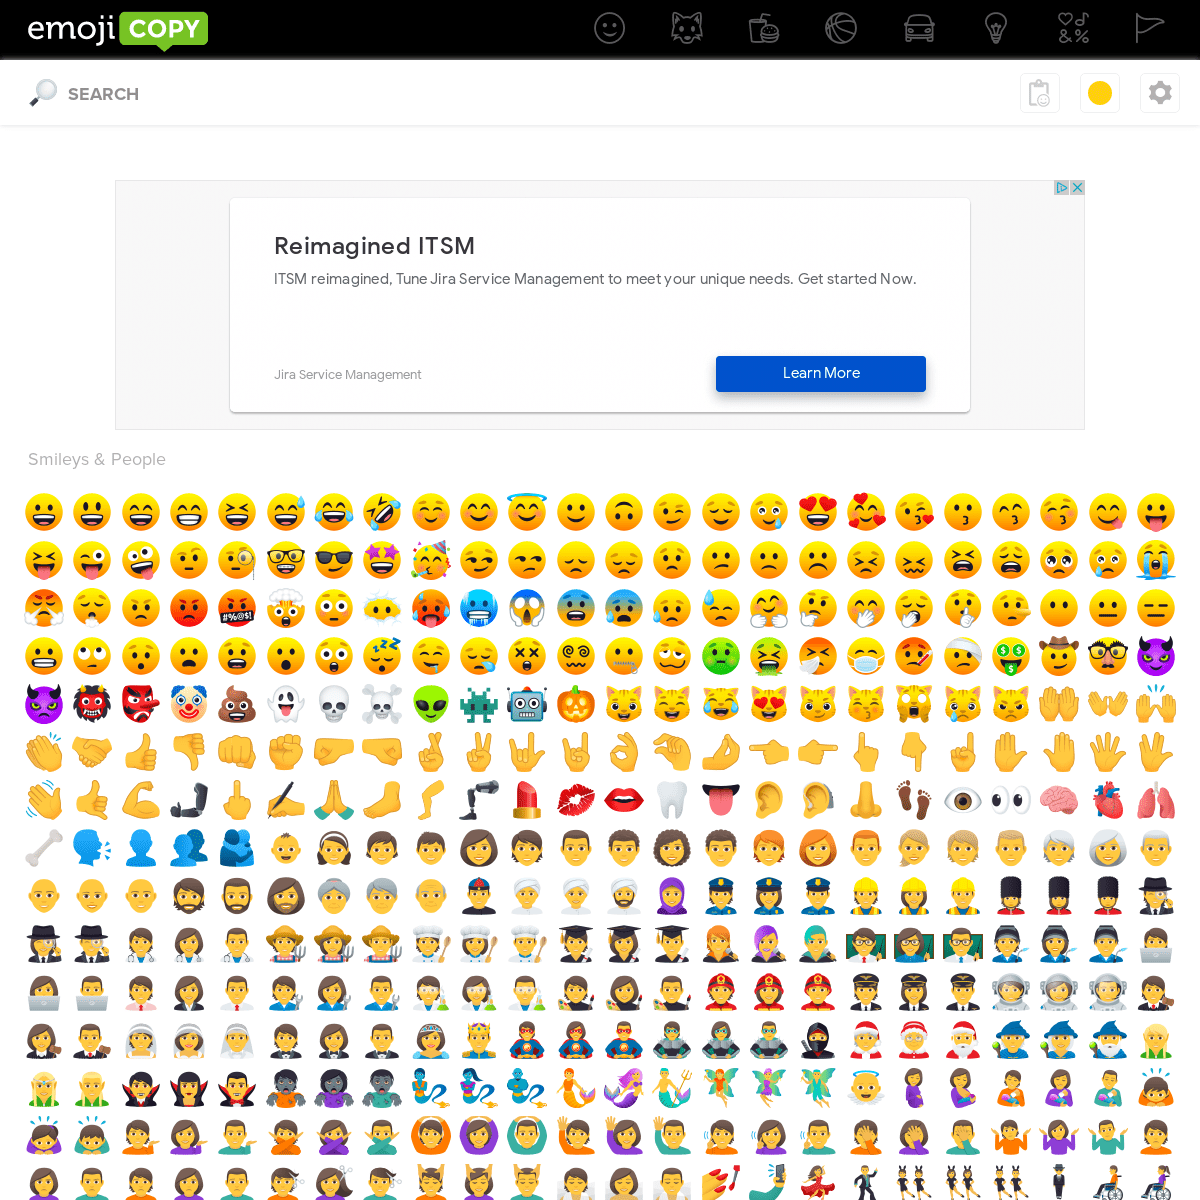 A complete backup of https://emojicopy.com